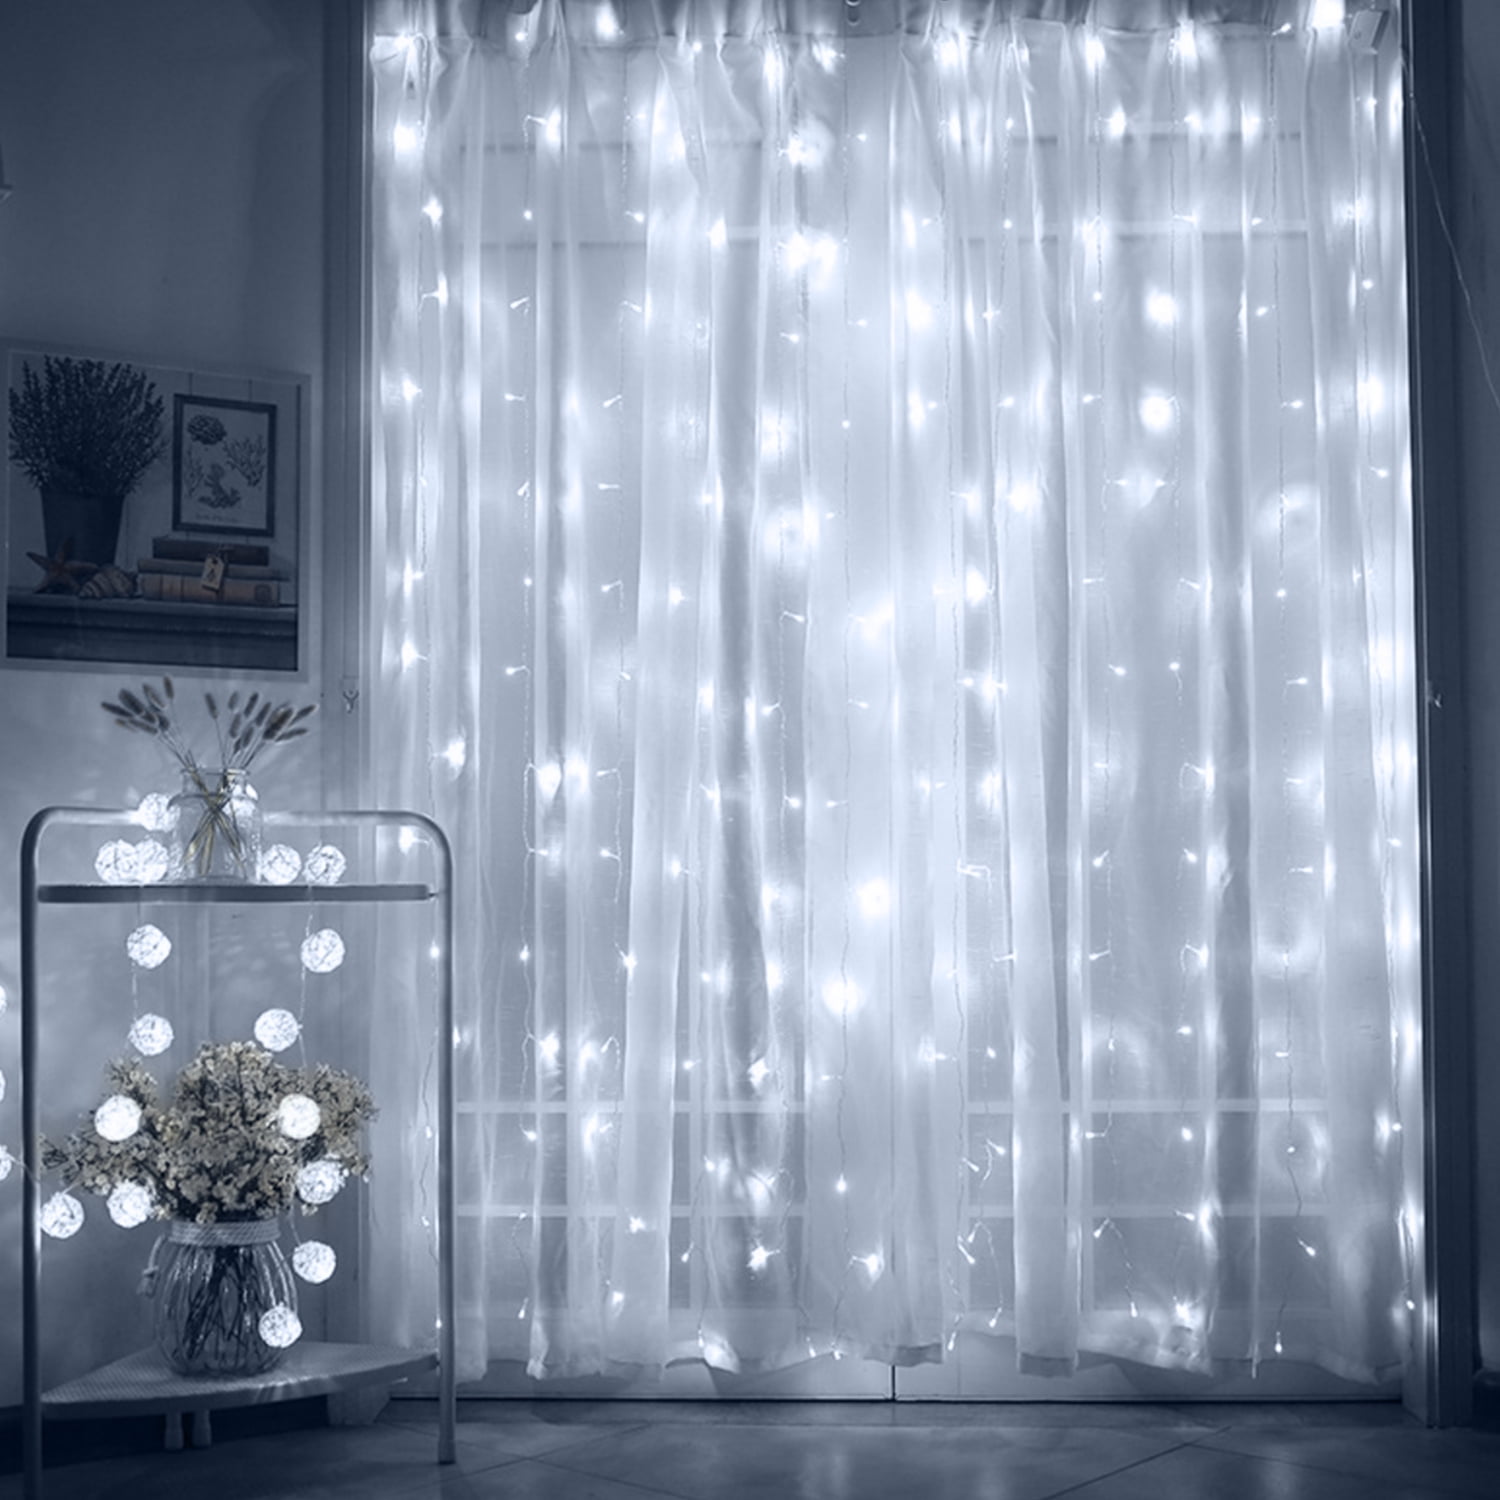 TORCHSTAR 9.8ft x 9.8ft LED Curtain Lights, Starry Christmas ...